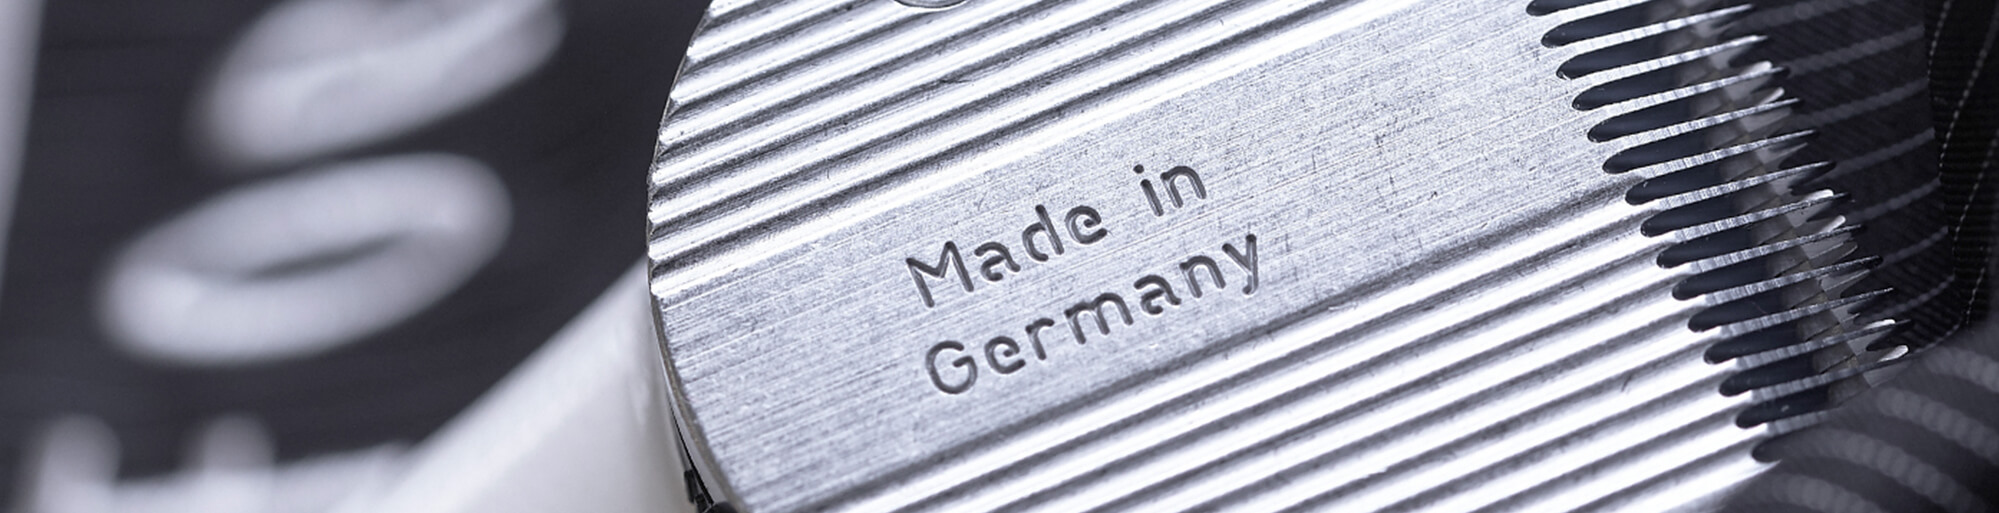 Made in Germany.jpg